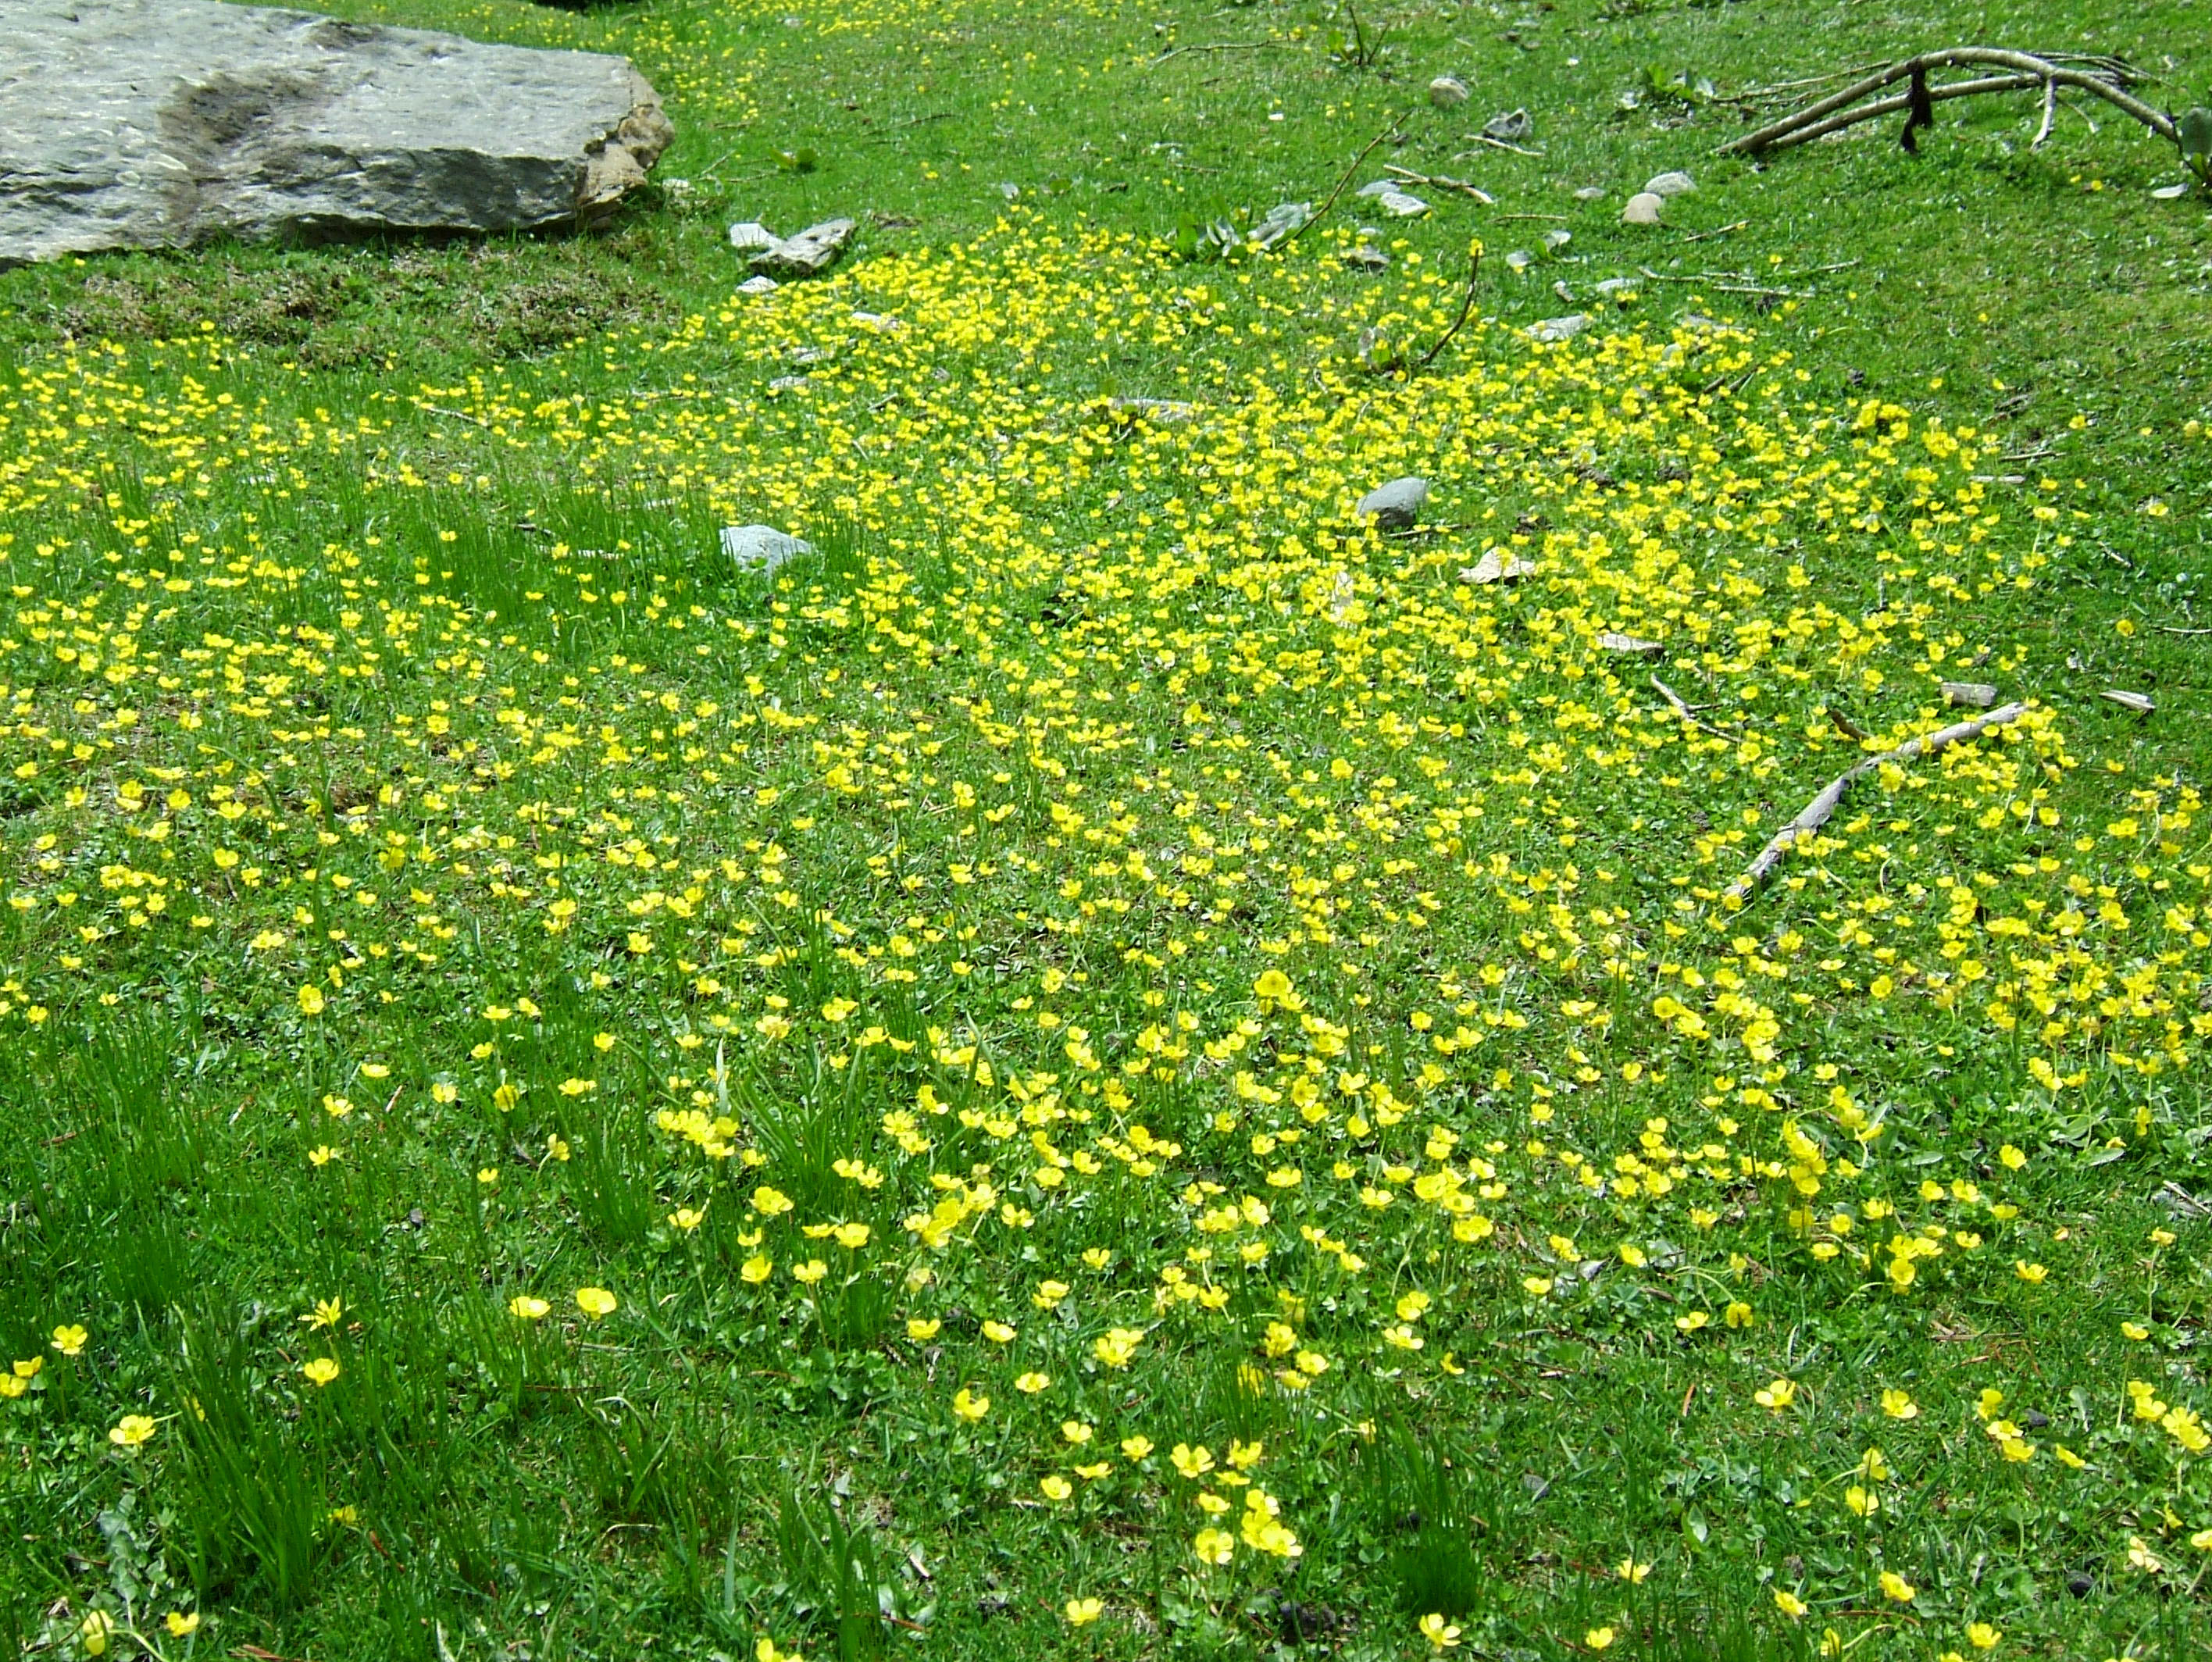 Local Wild spring flowers Srinagar Kashmir India 13